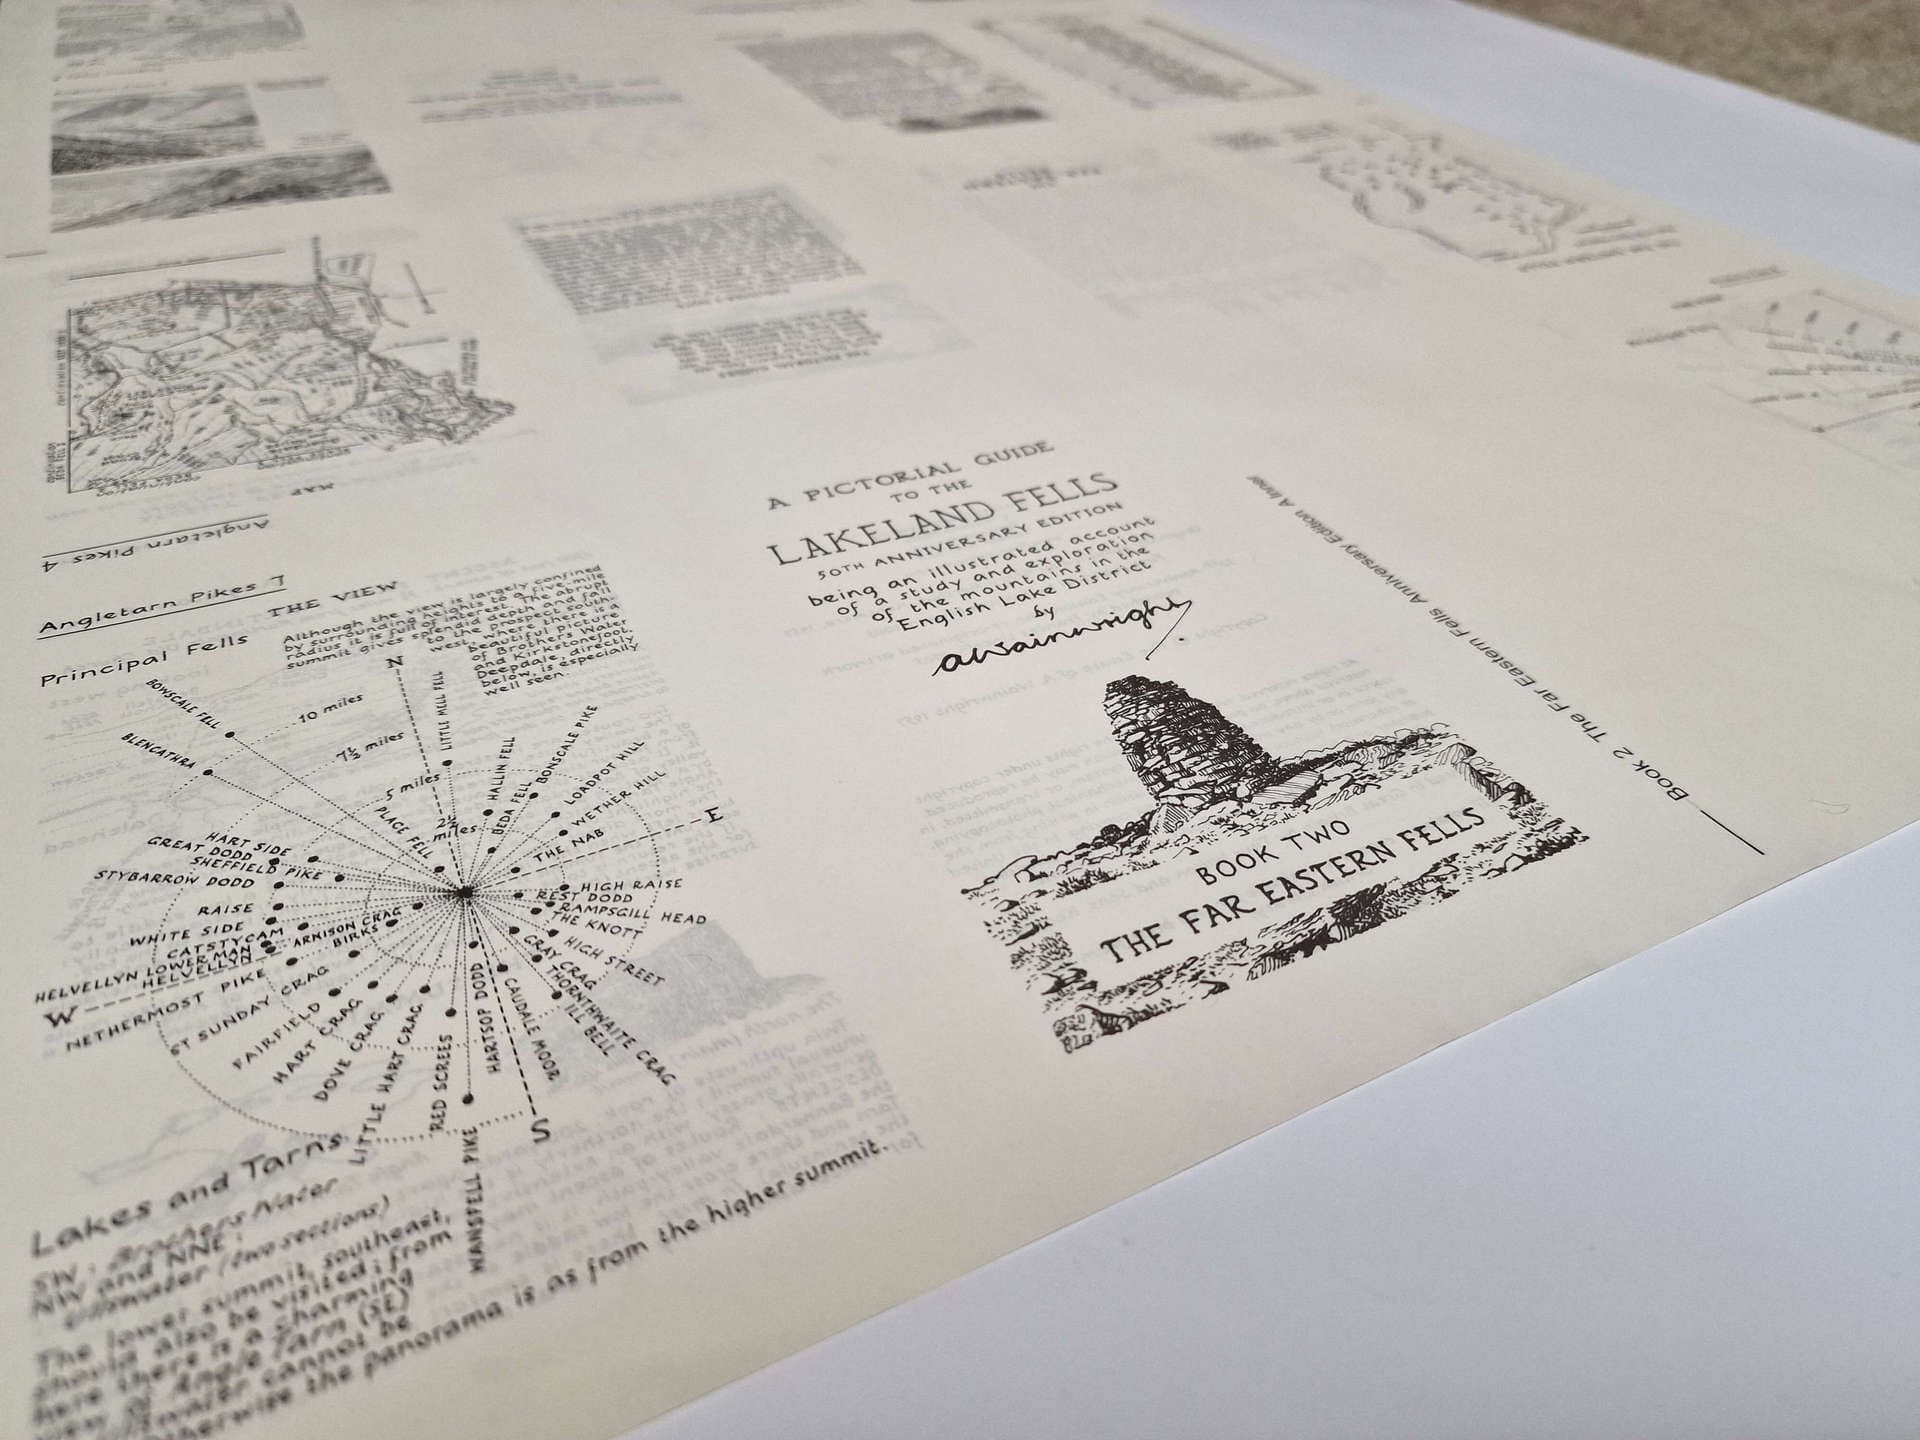 The Far Eastern Fells Printed Sheets